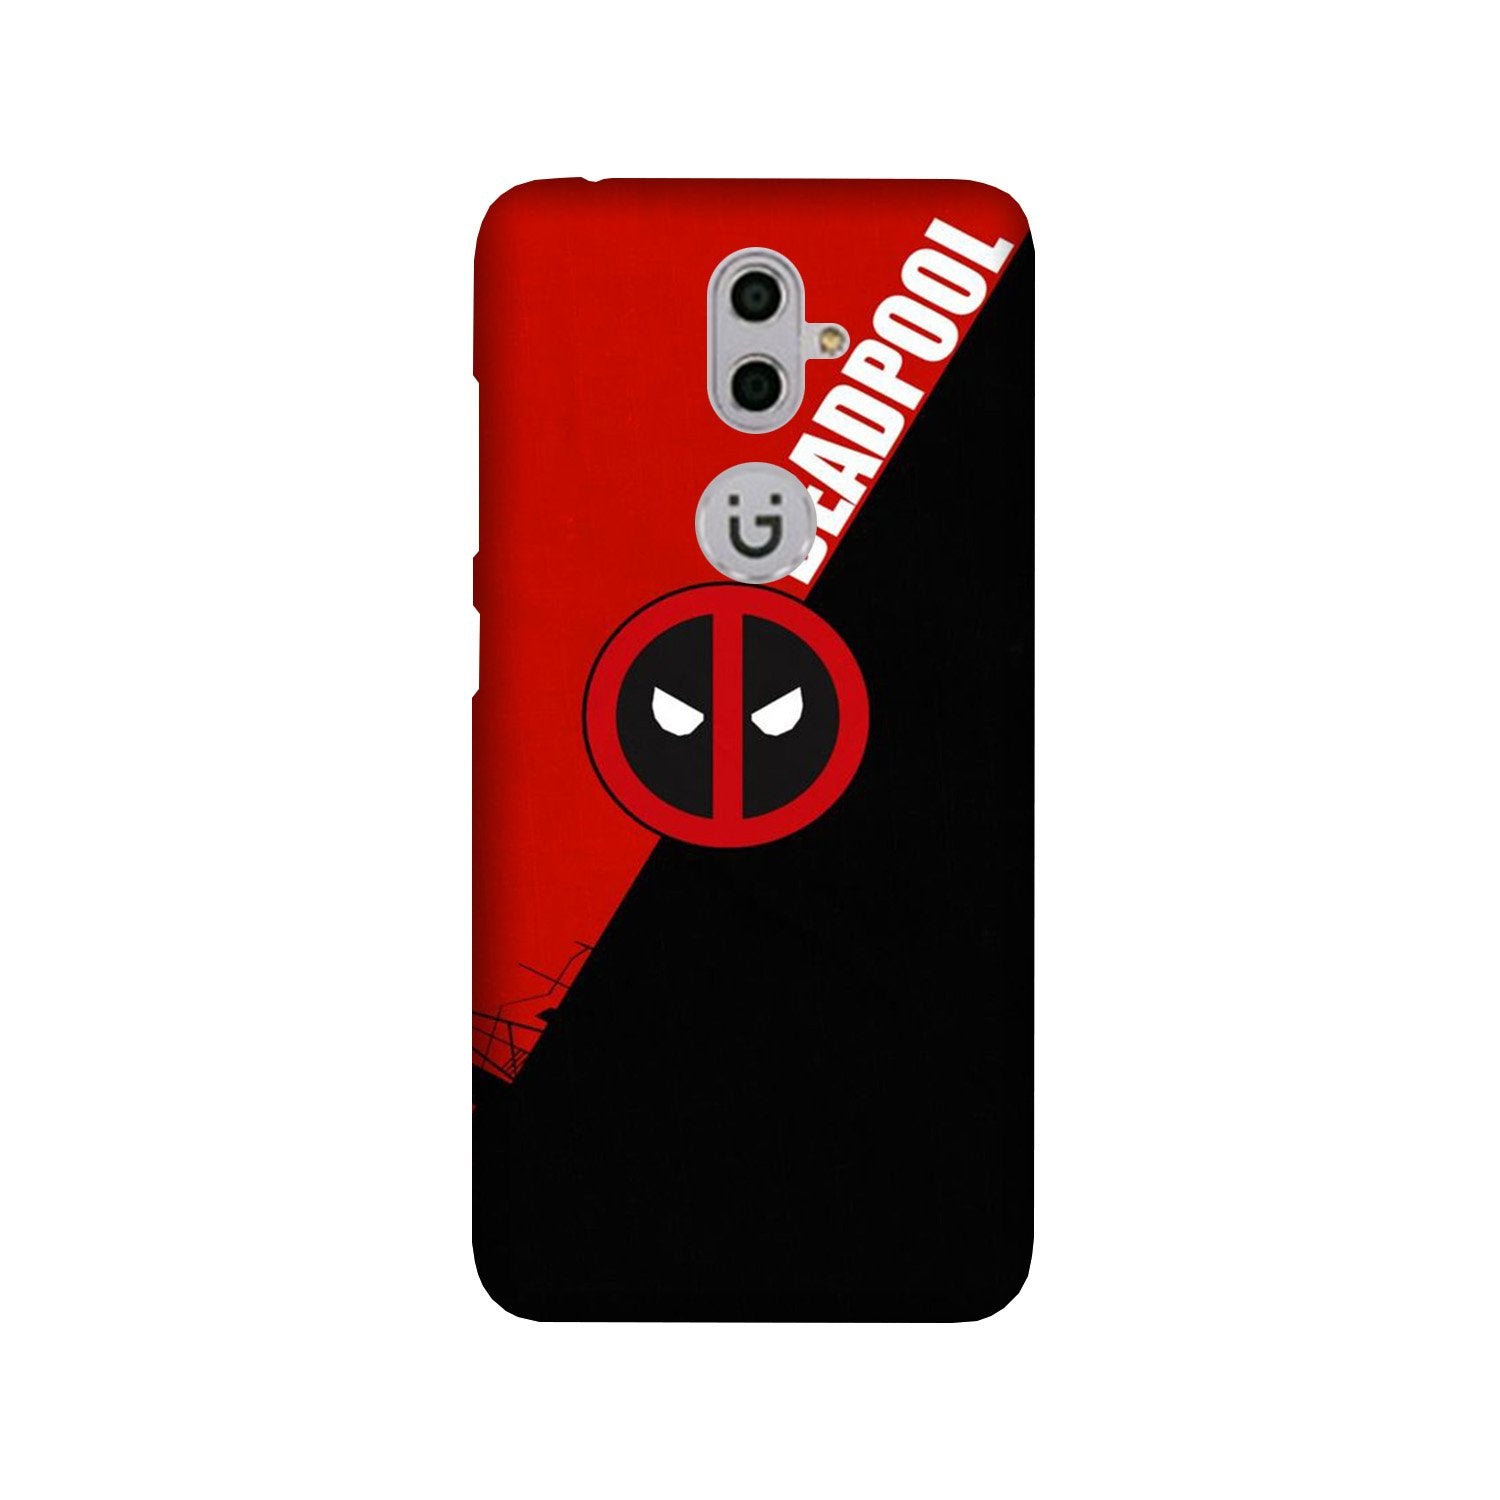 Deadpool Case for Gionee S9 (Design No. 248)